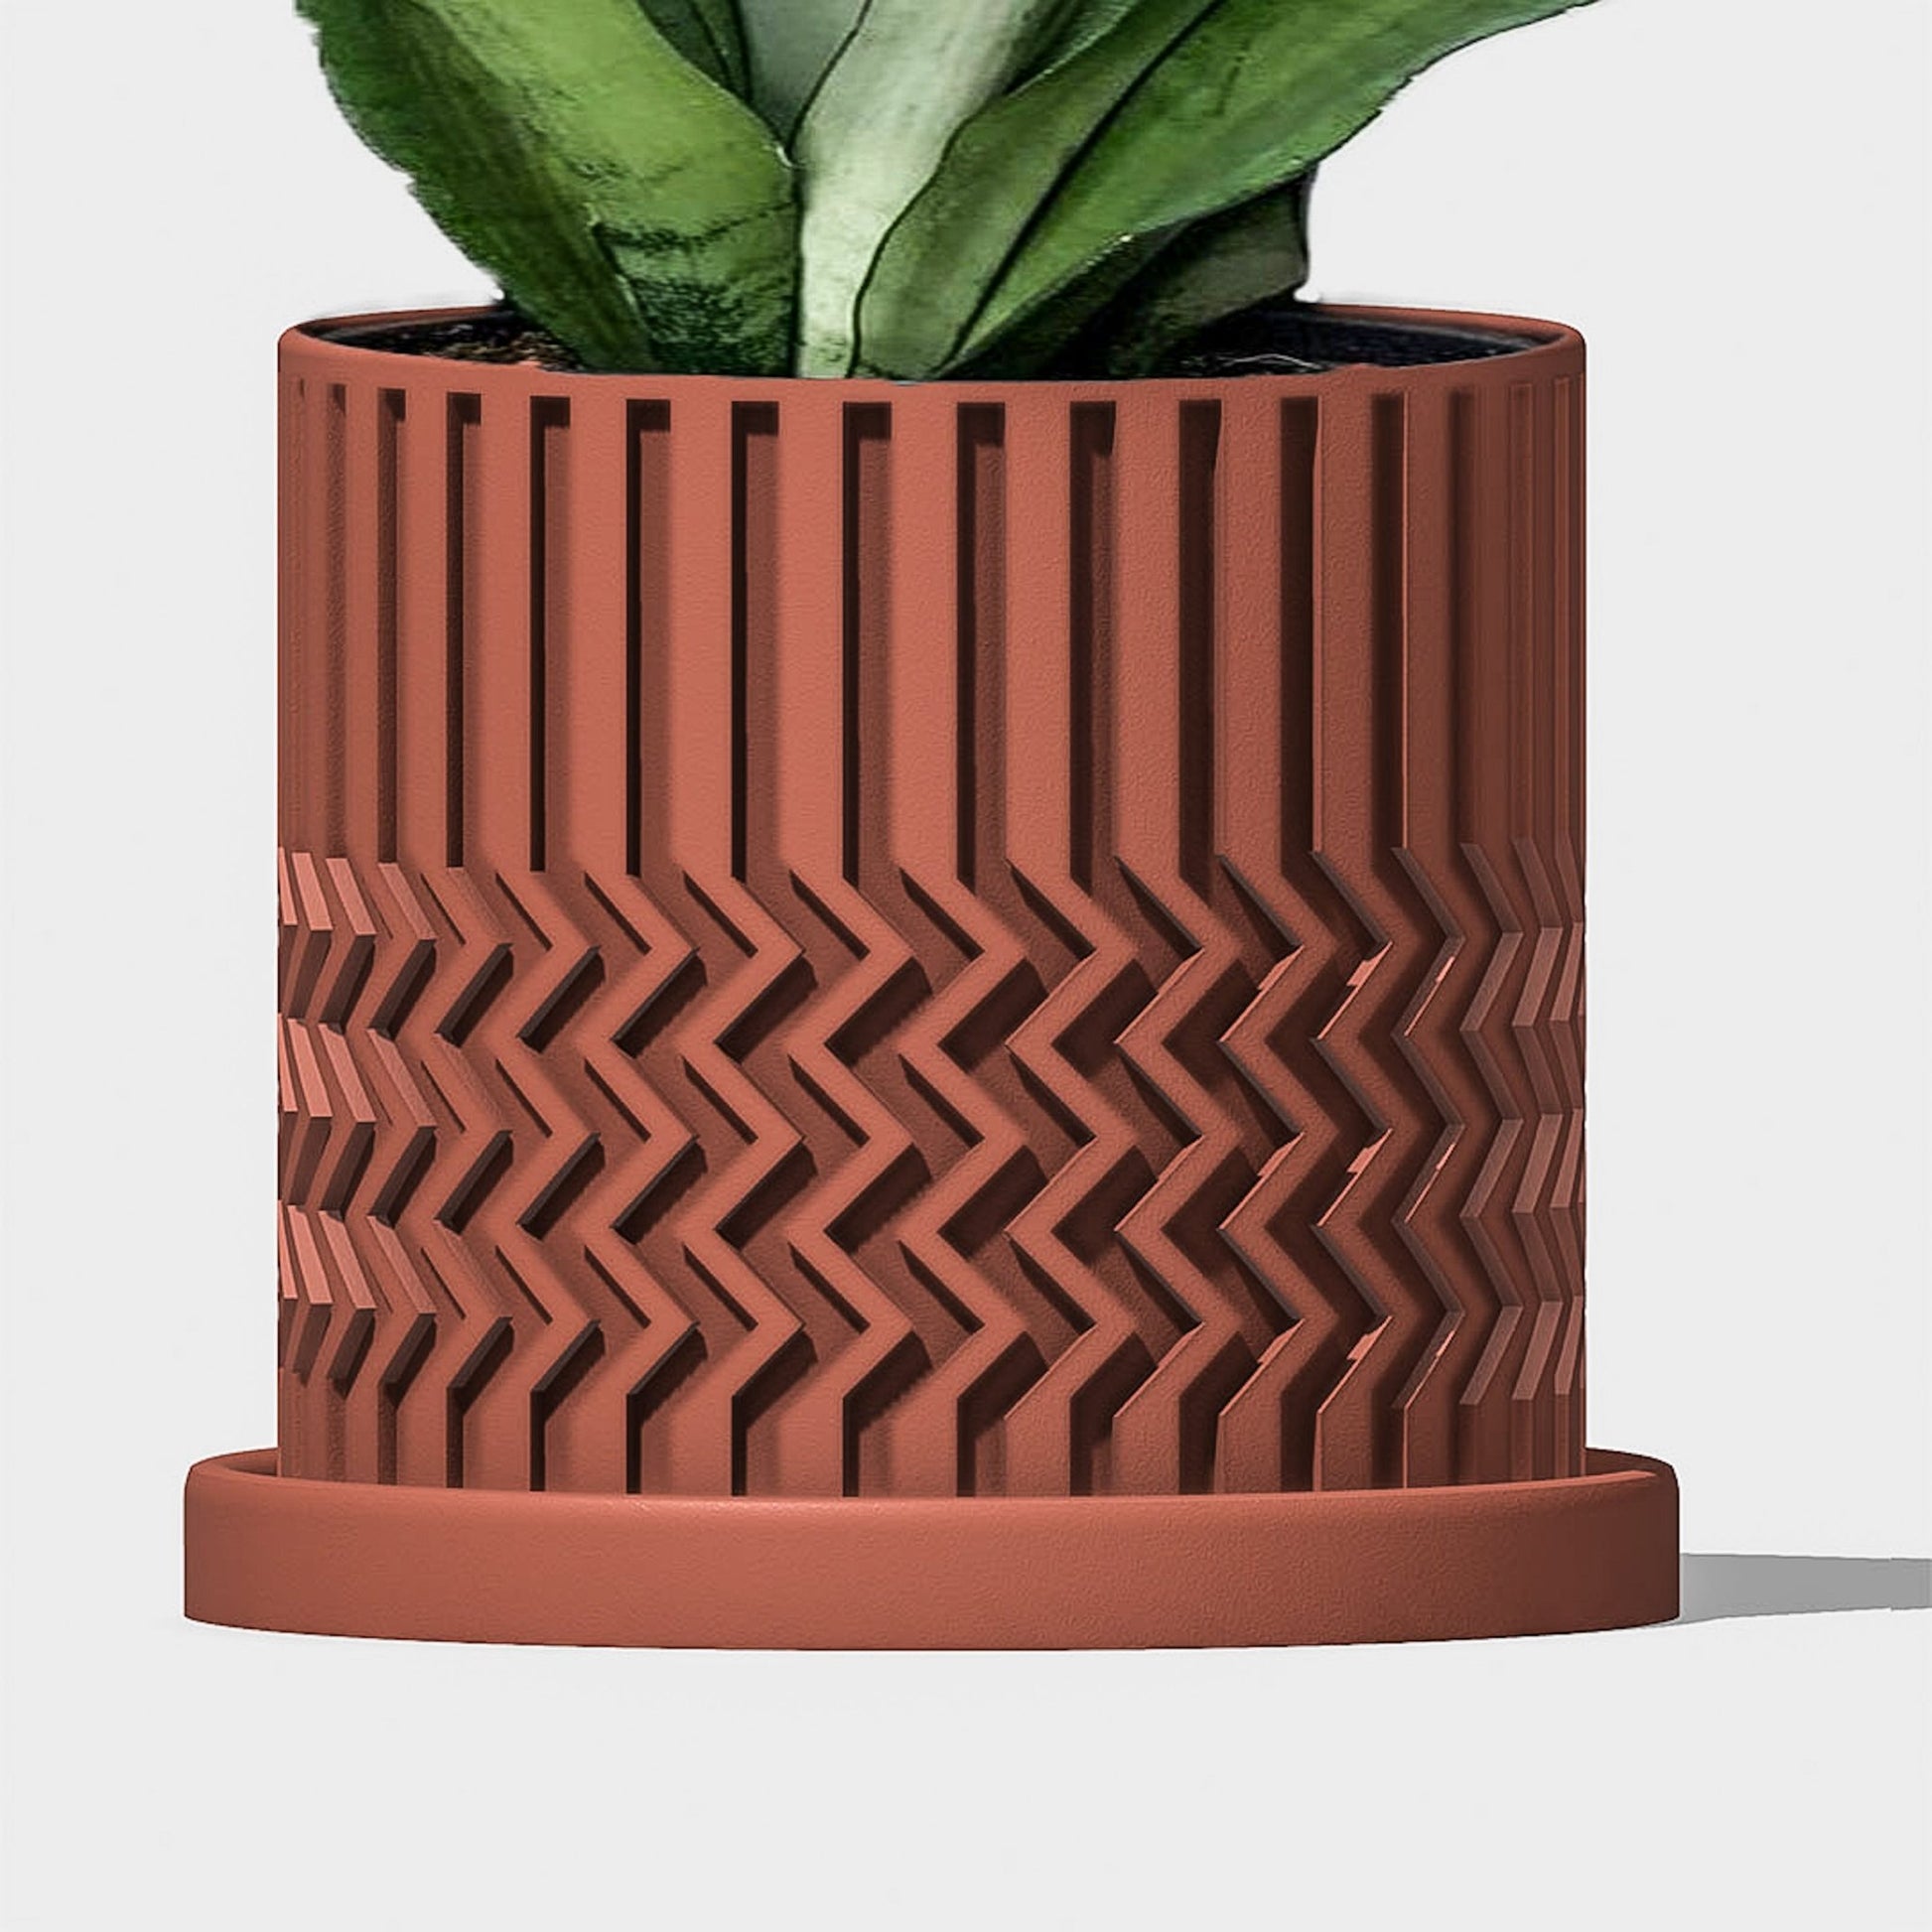 Minimalist Zig-Zag Planter - Rosebud HomeGoods Terracotta 4 With Drip Tray MODERN HOME GOOD